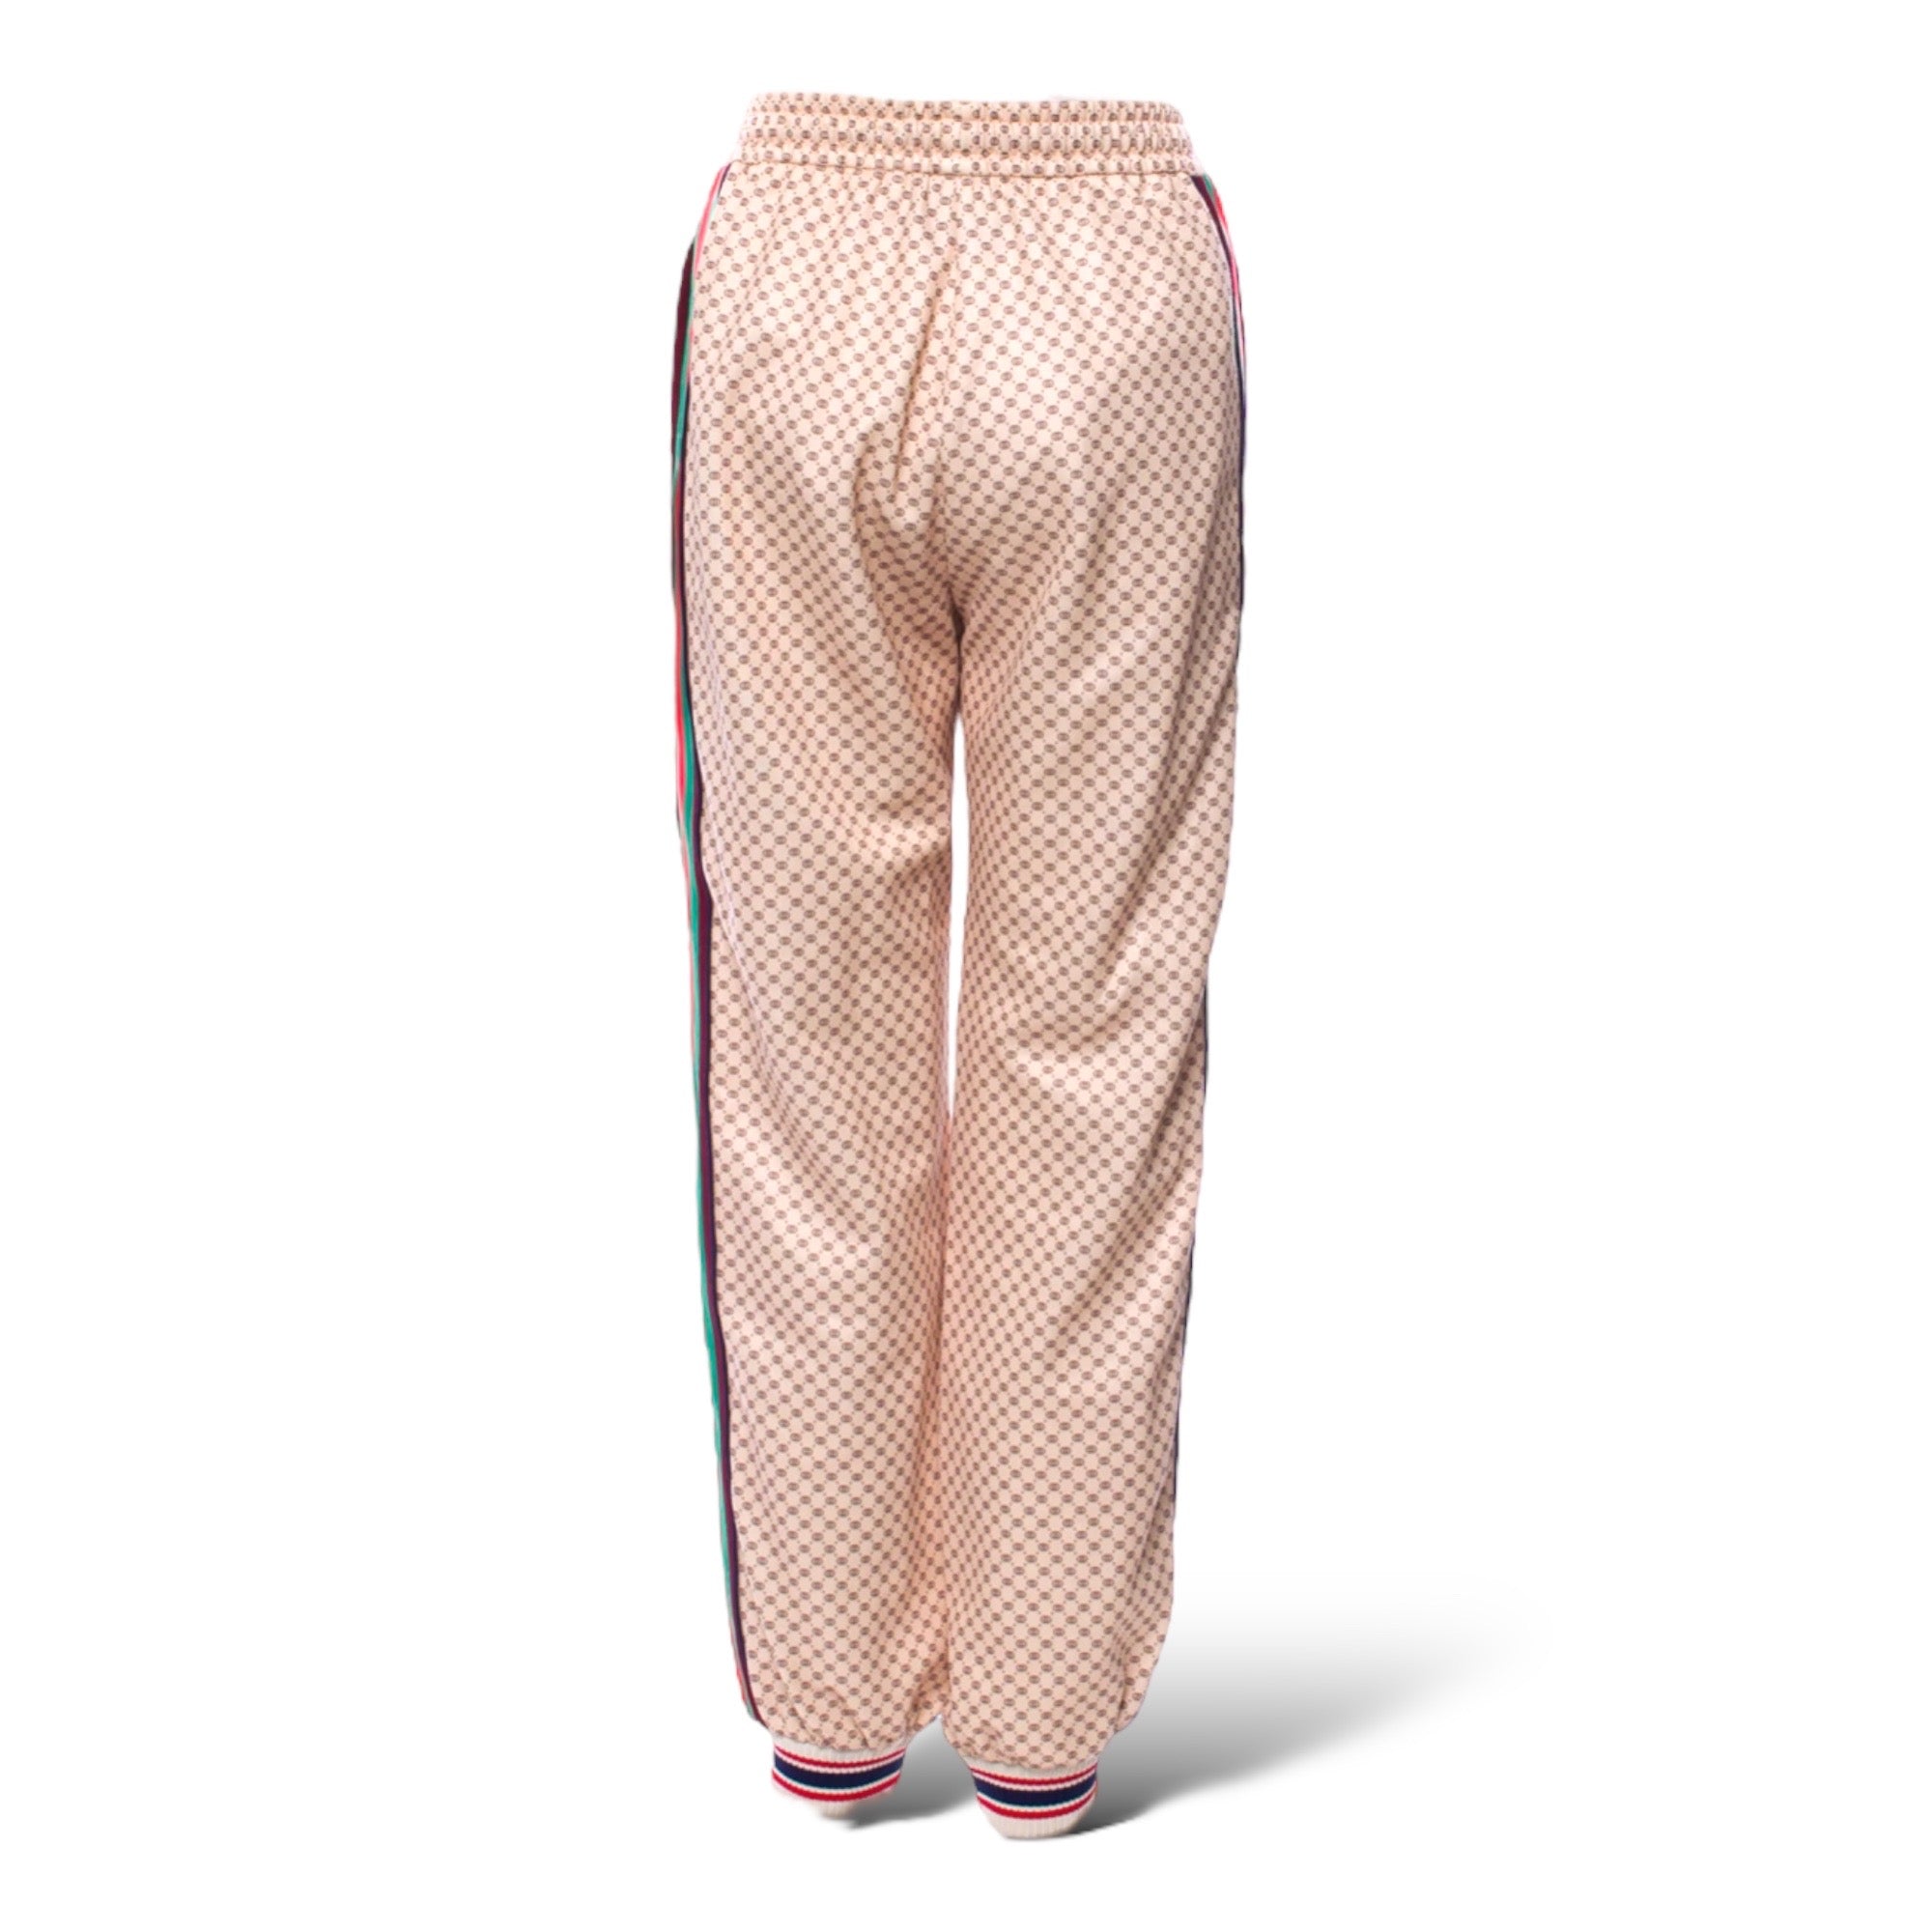 GUCCI Printed Sweatpants
| Size: XS |